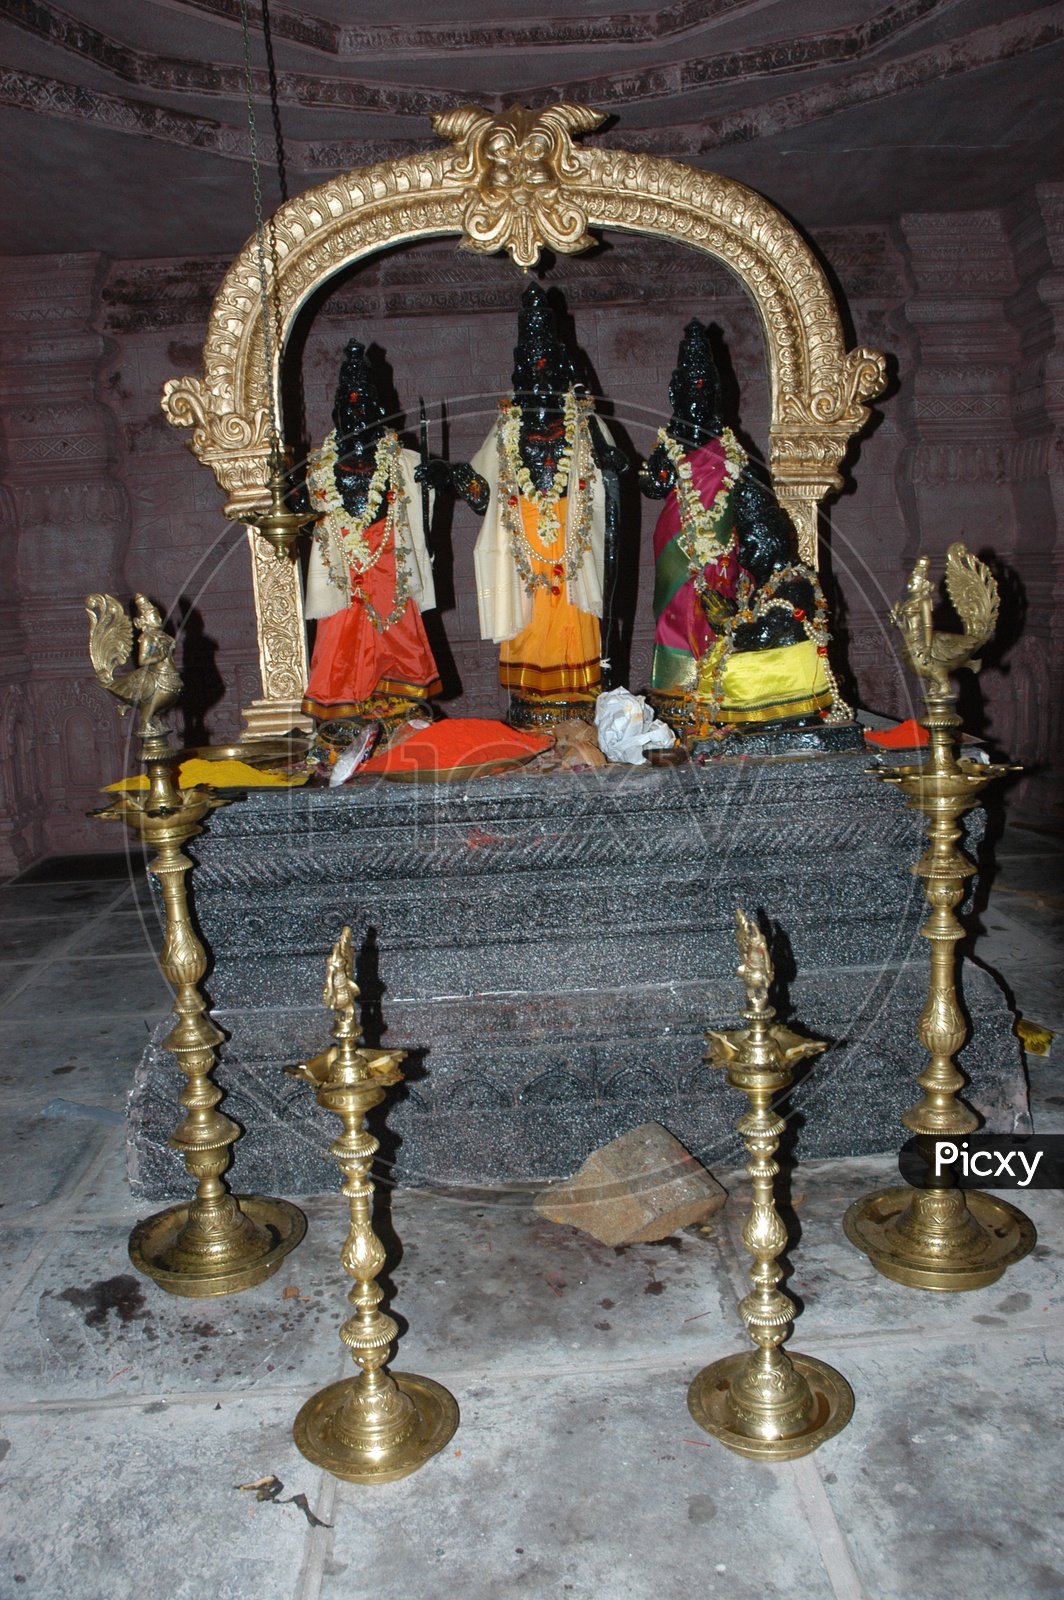 Lord Sri Rama Sita Laxman Idols